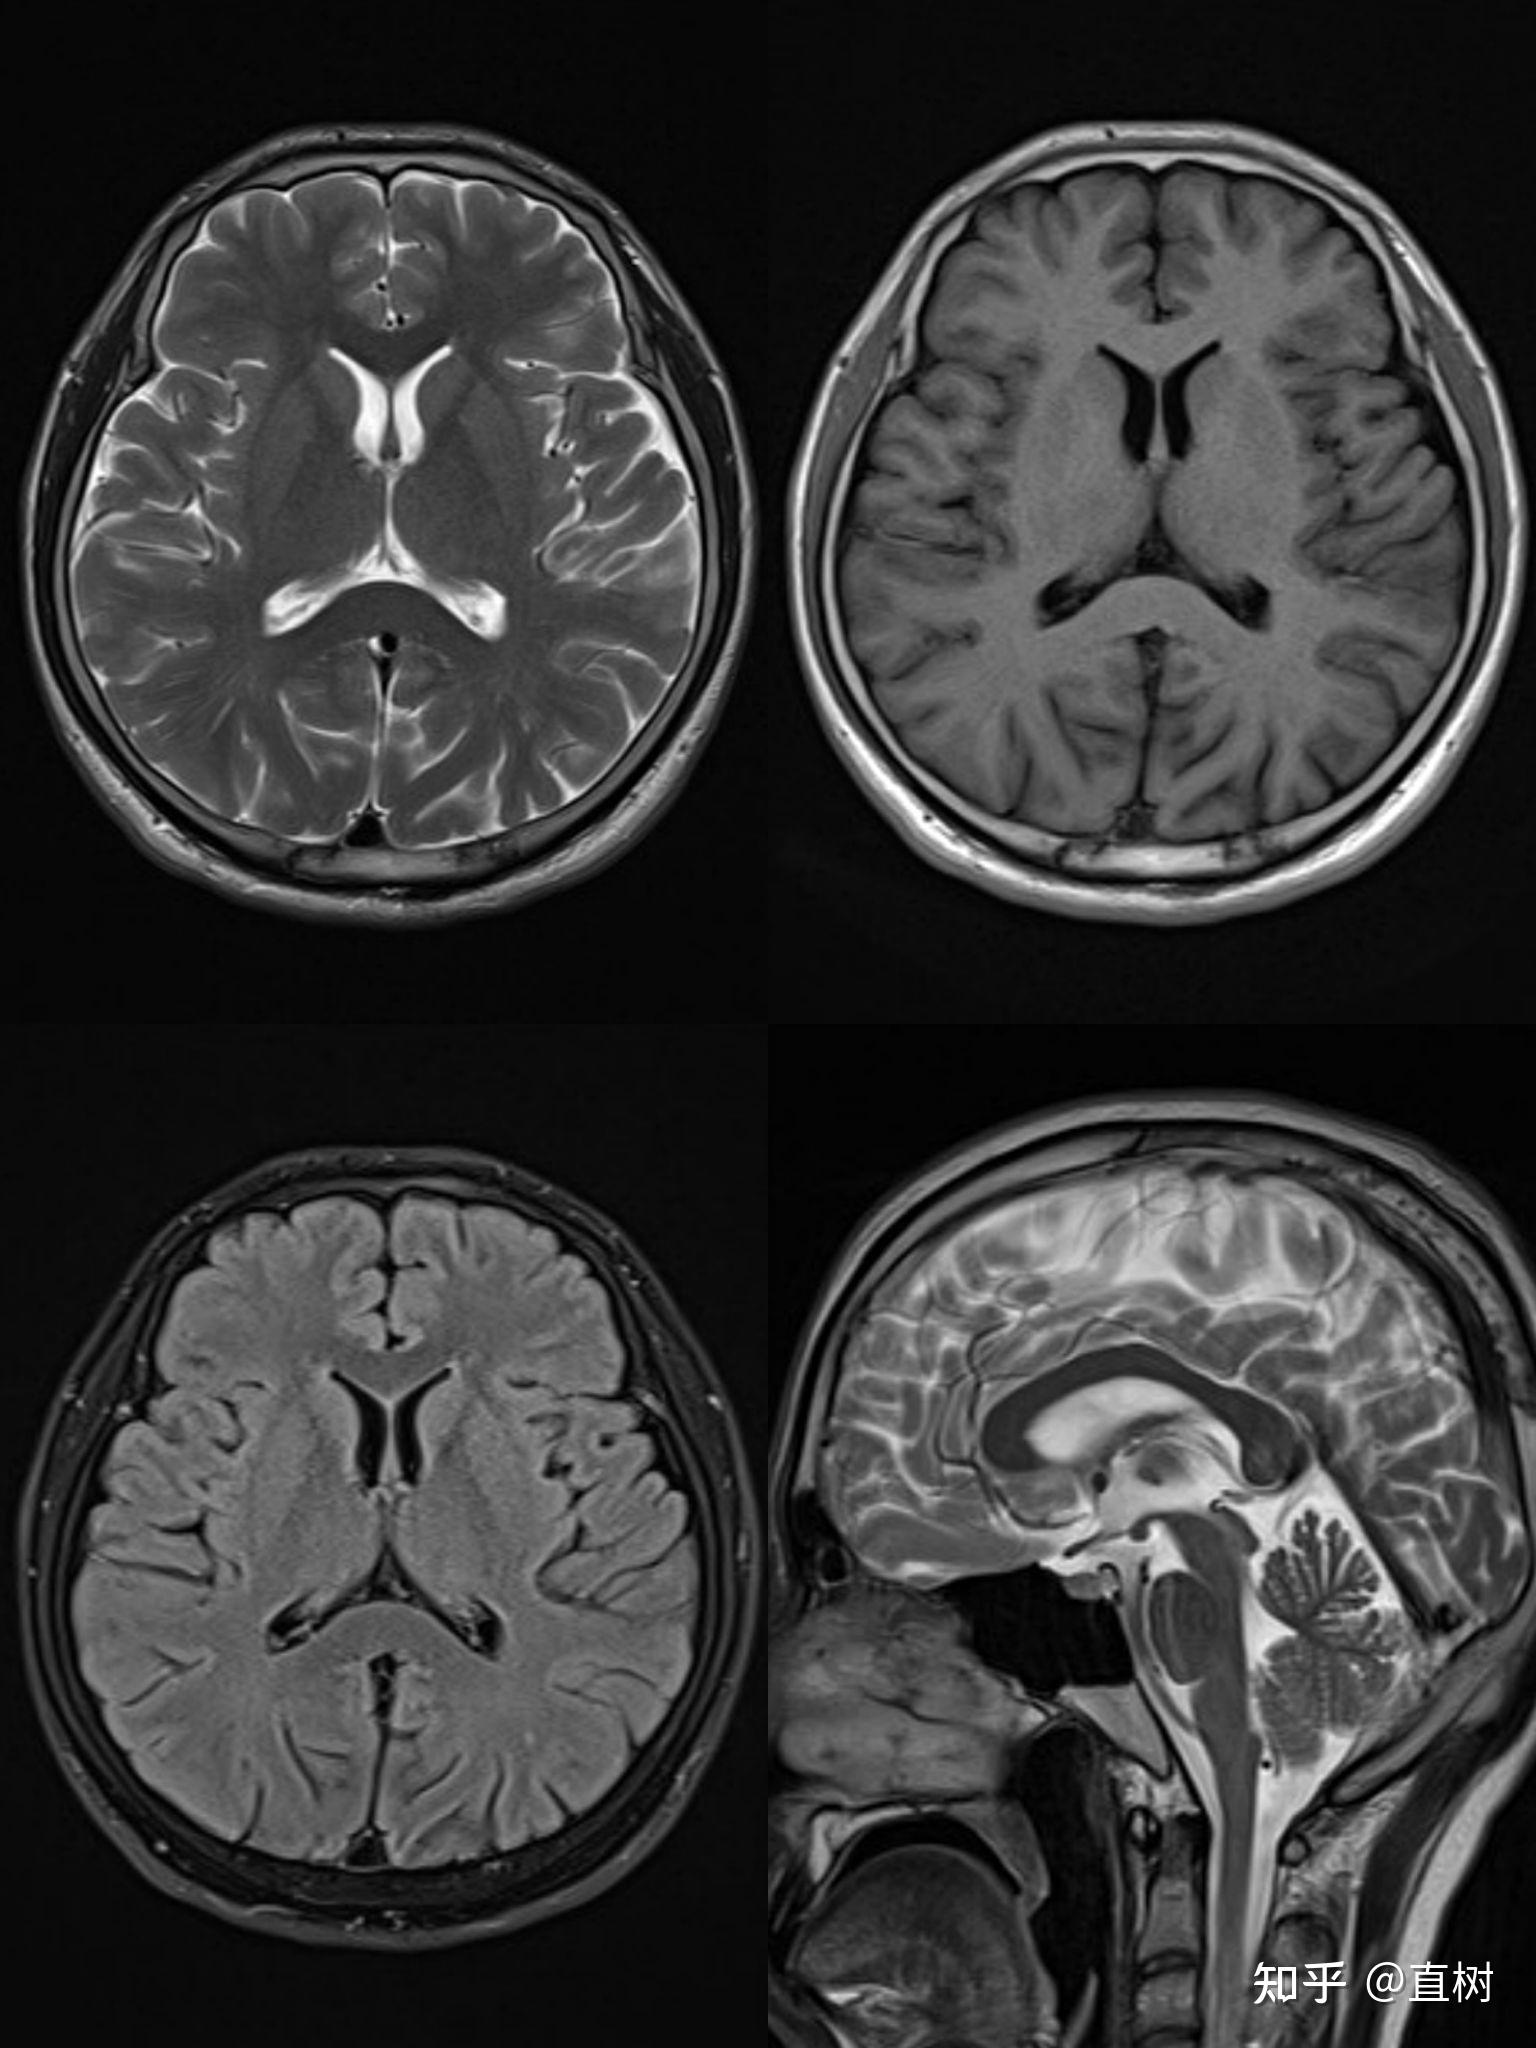 MR图谱 | 放射性脑损伤vs胶质瘤复发-INC国际神经外科医生集团